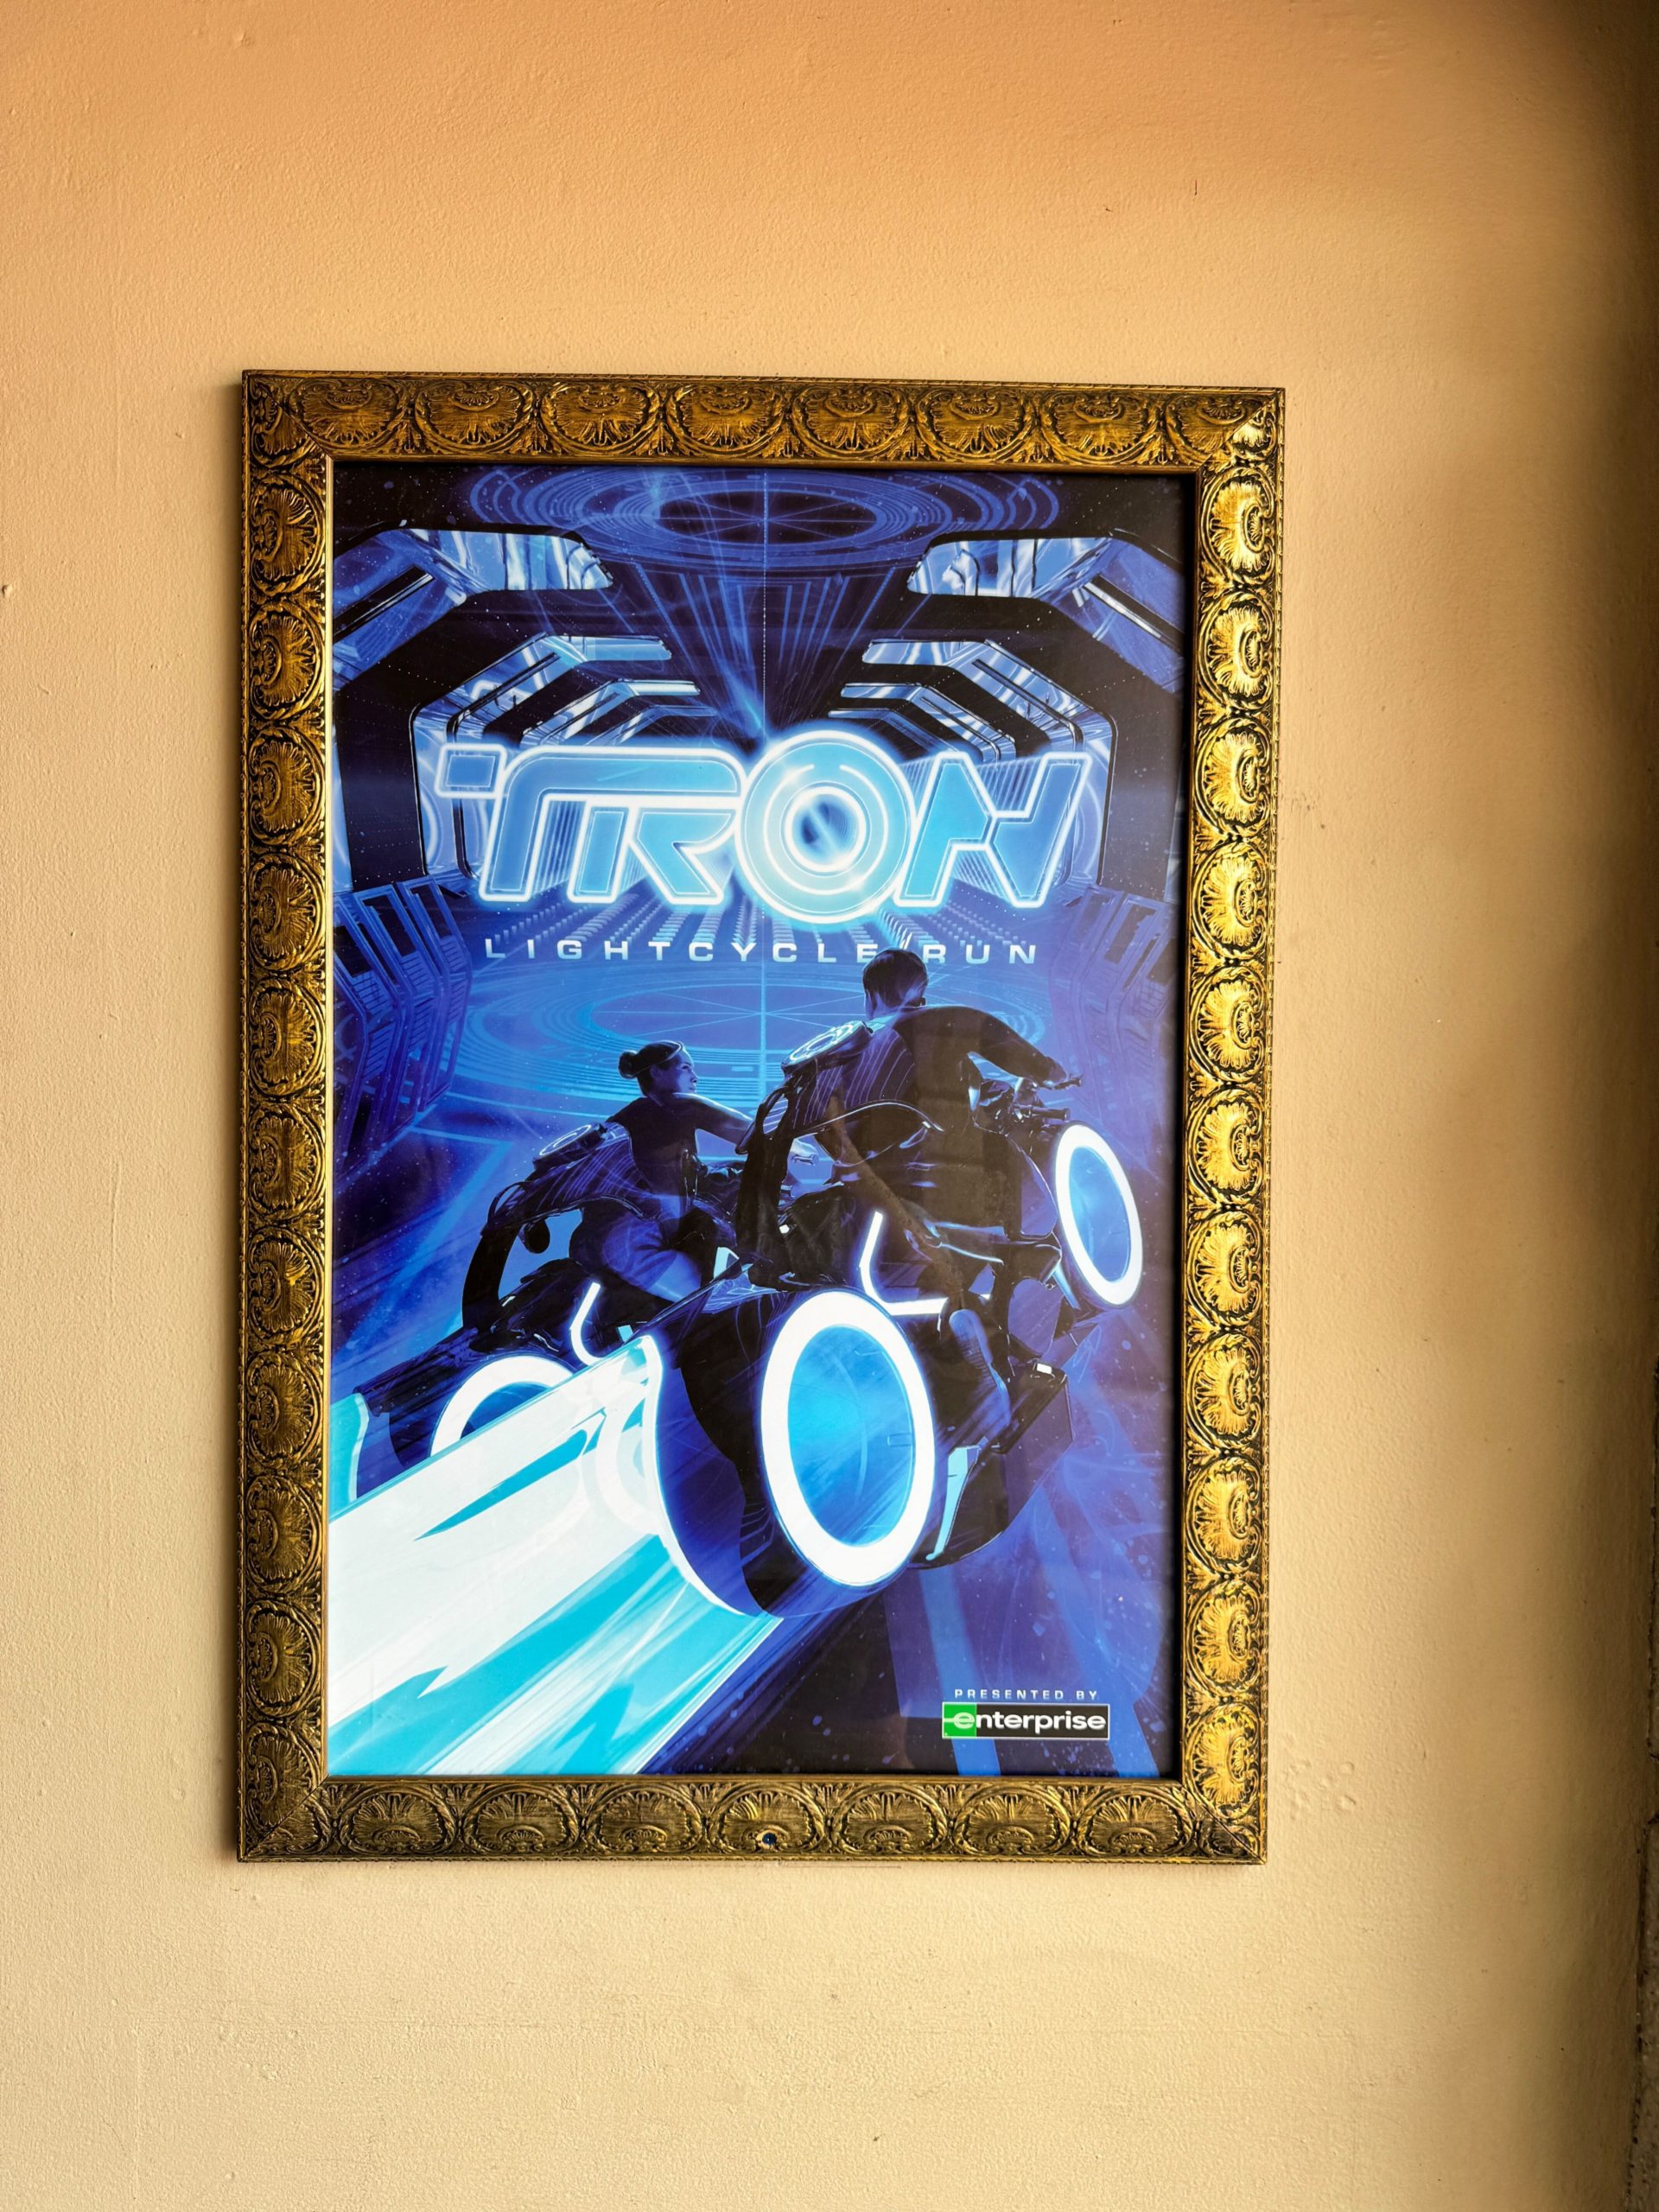 TRON Lightcycle / Run Poster